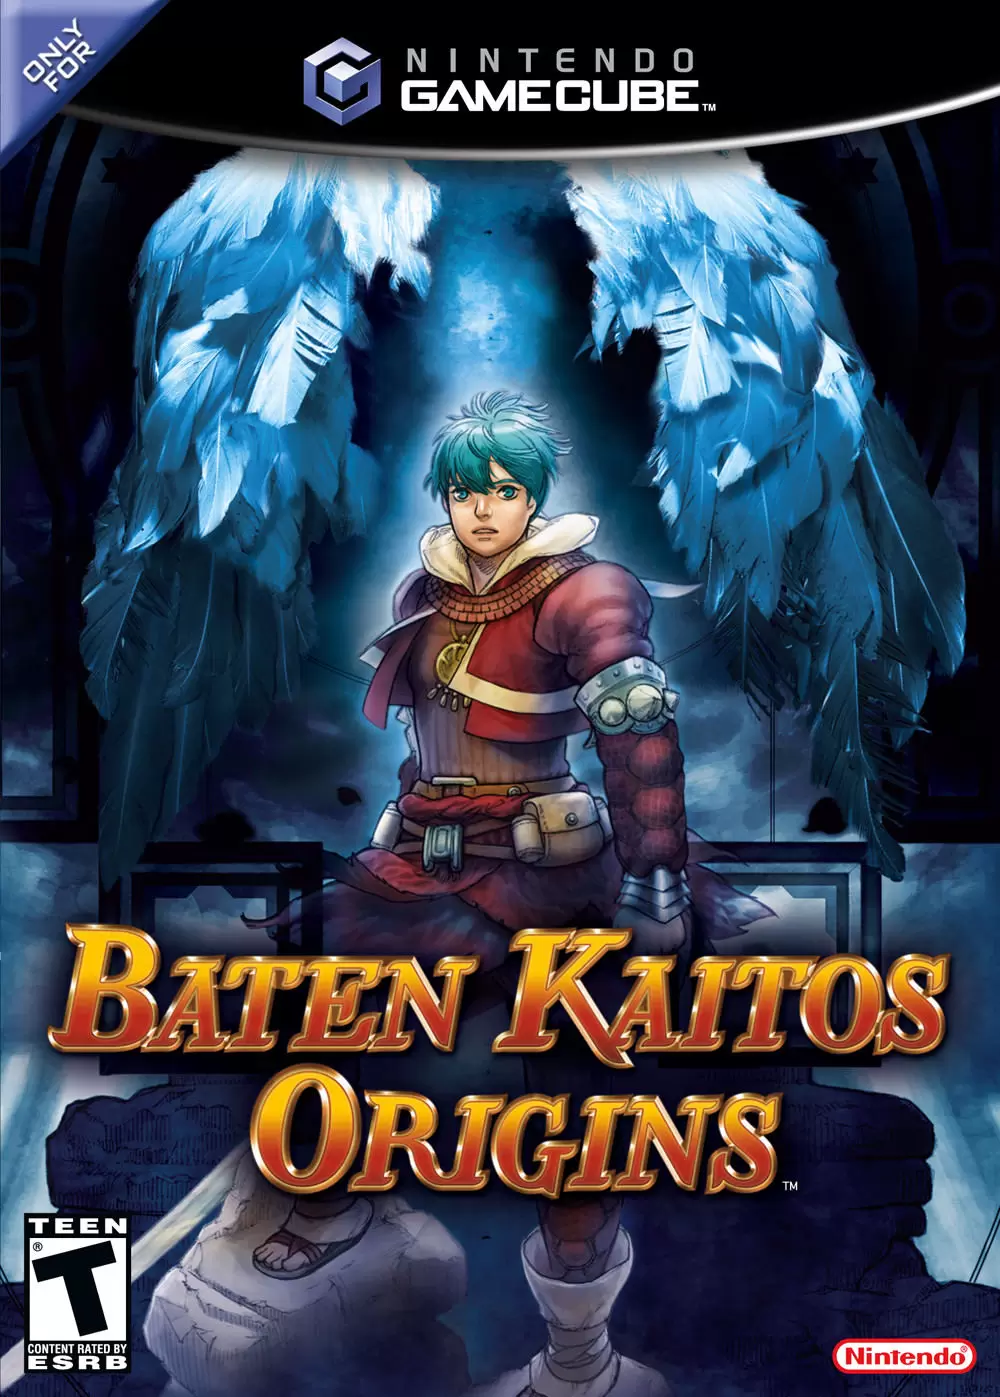 Nintendo Gamecube Games - Baten Kaitos Origins